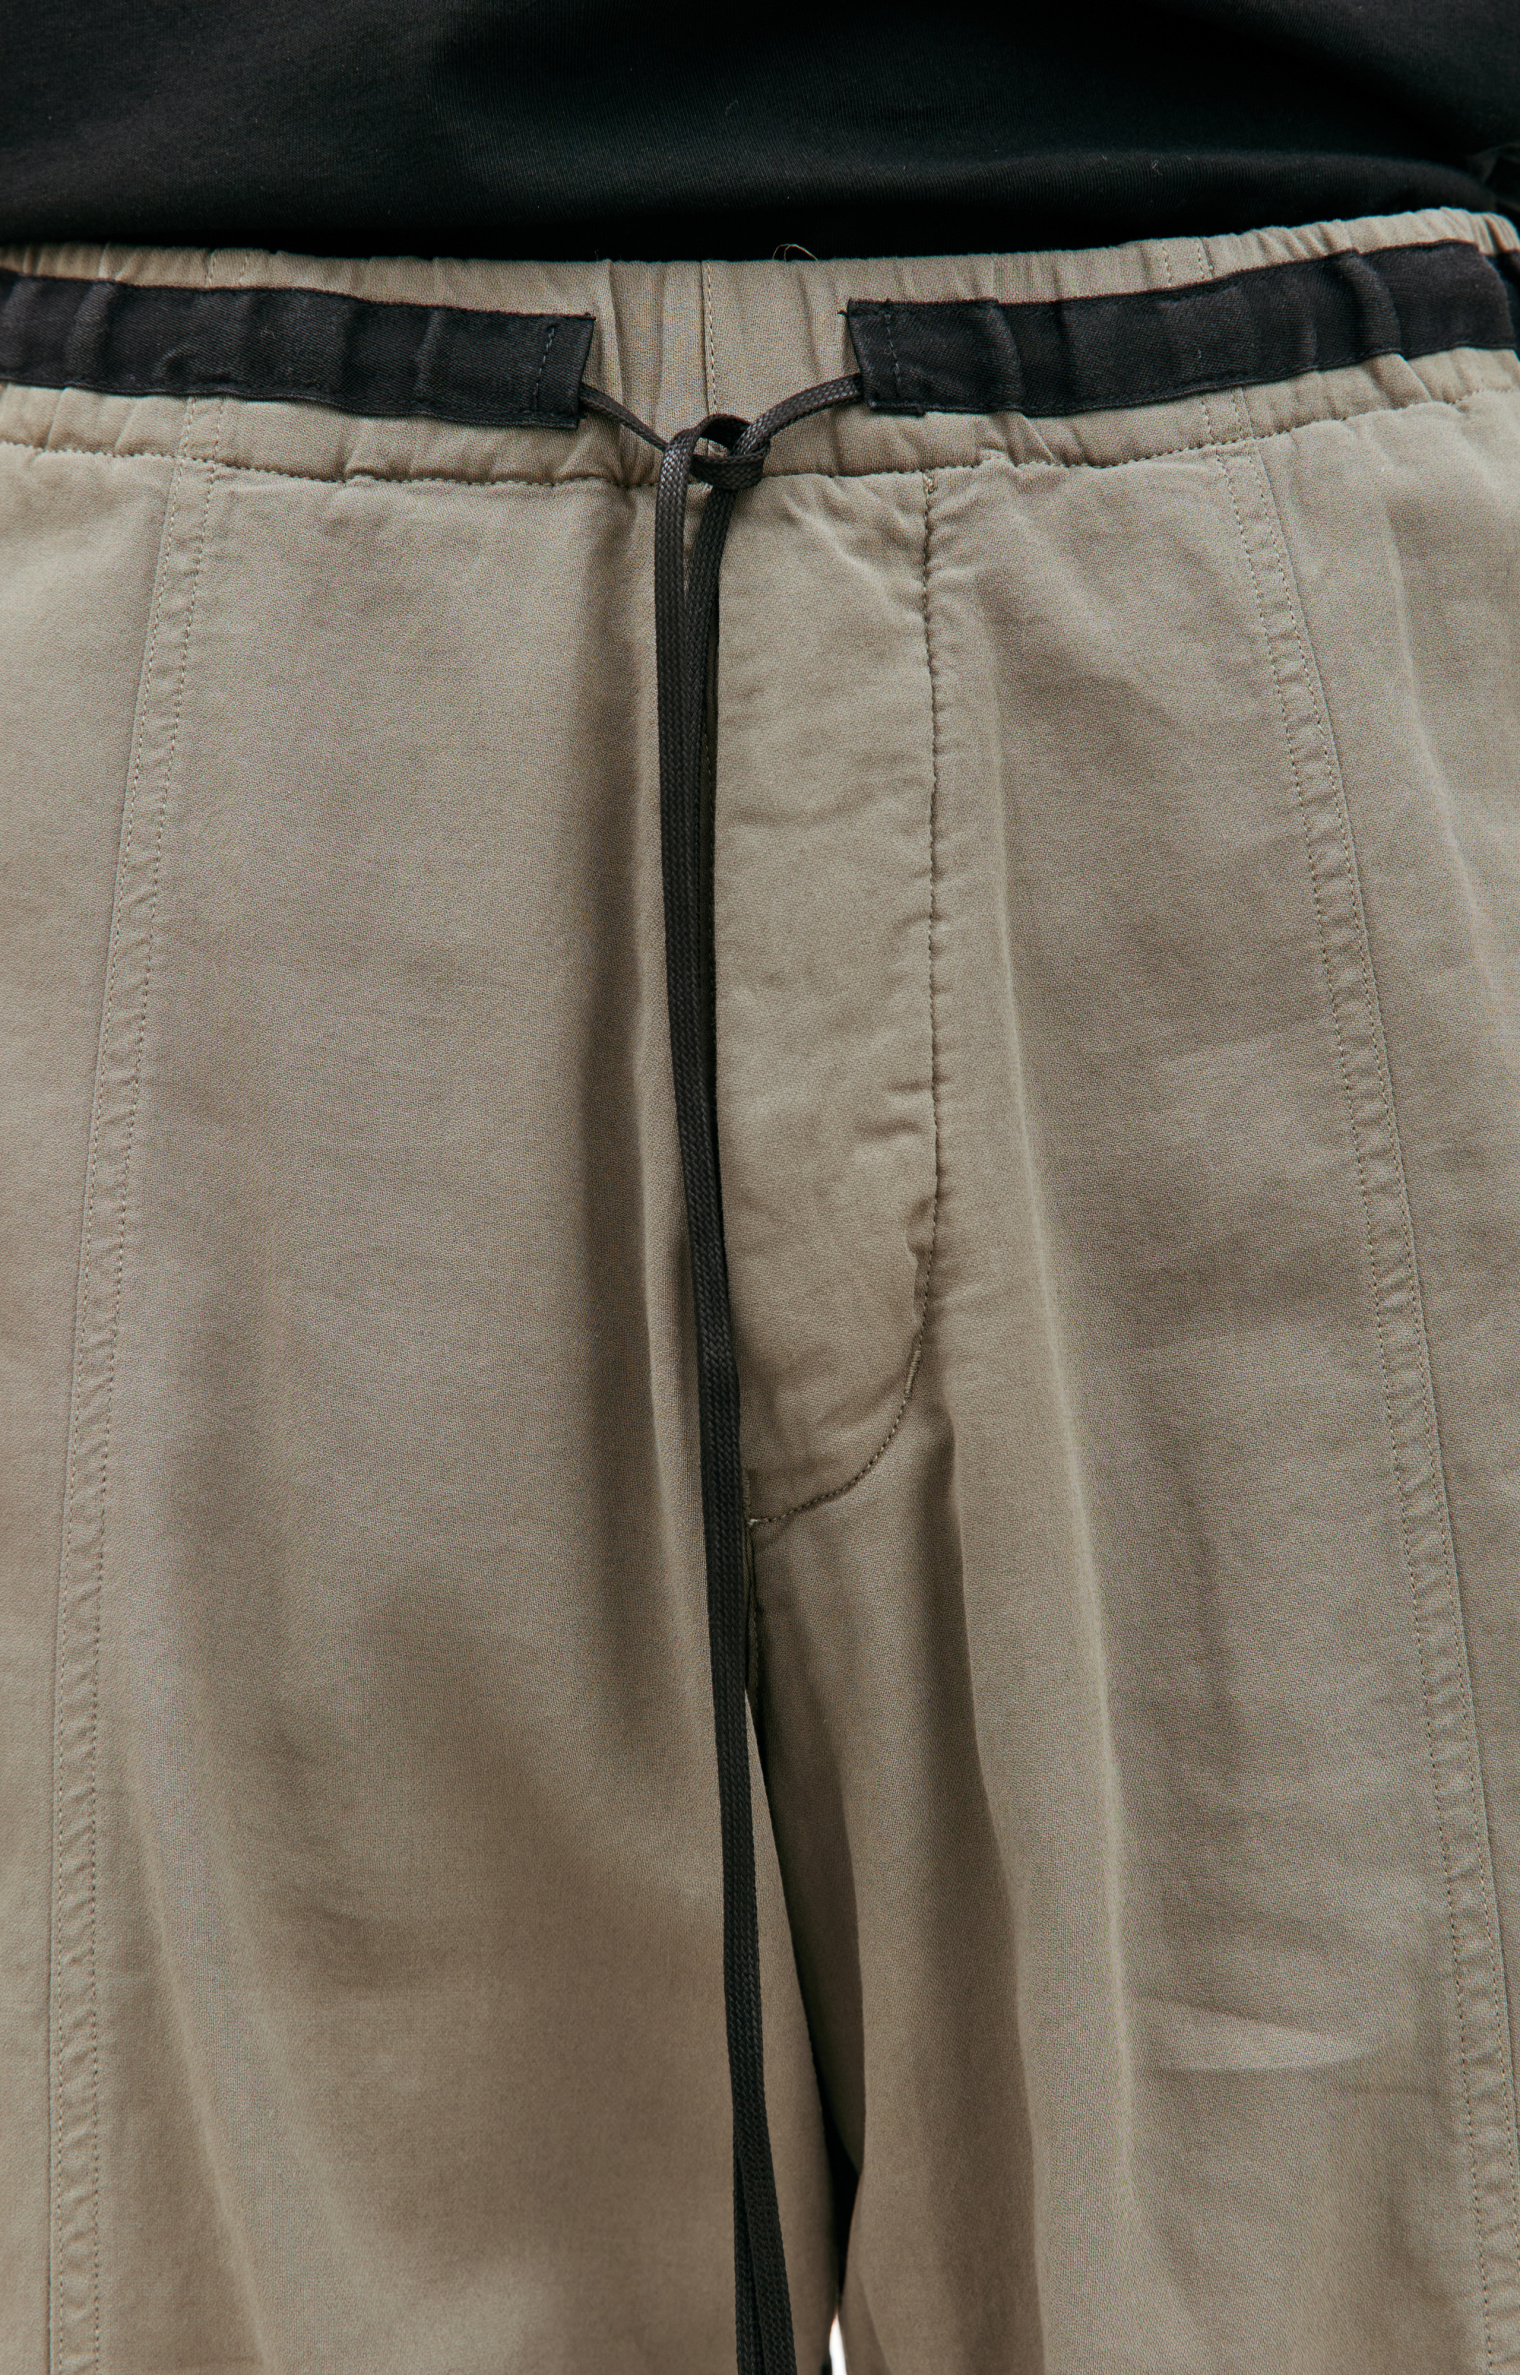 The Viridi-Anne Khaki wide trousers